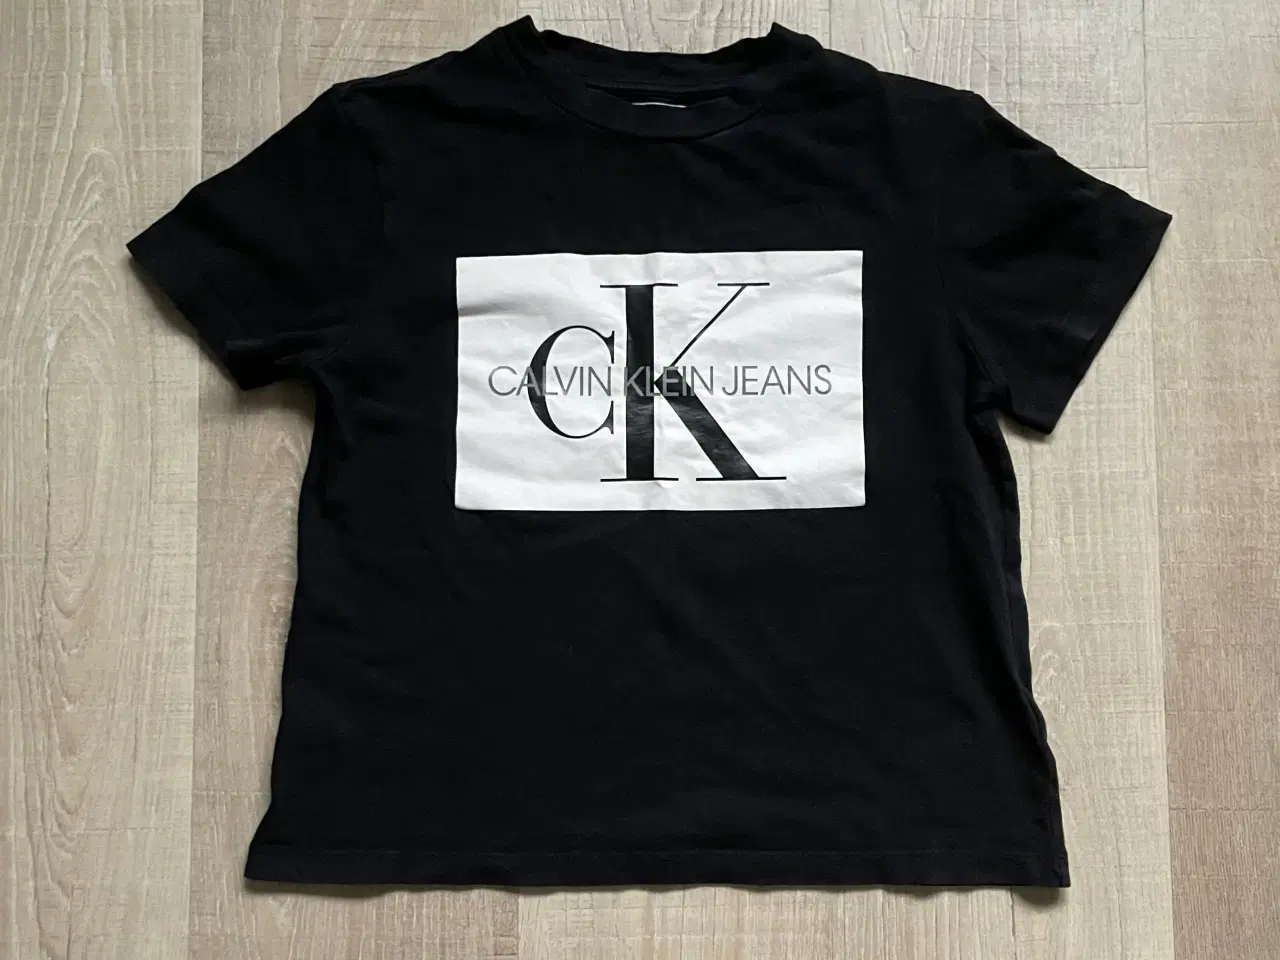 Billede 1 - Calvin Klein Jeans t-shirt str. XS